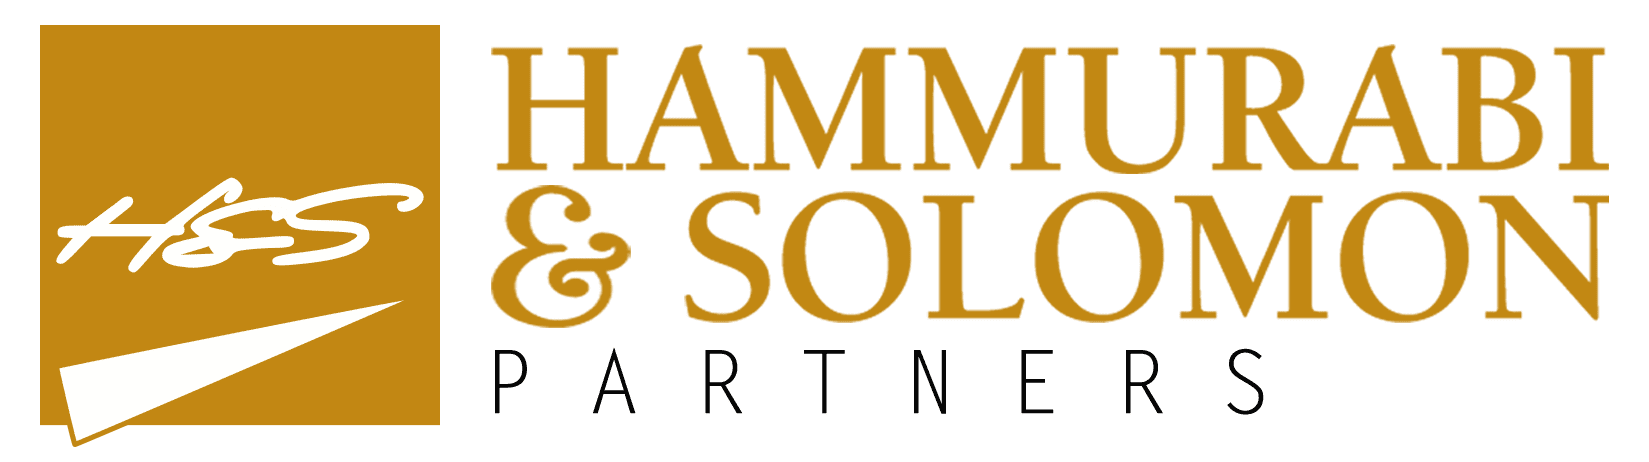 Hammurabi Indian law firm